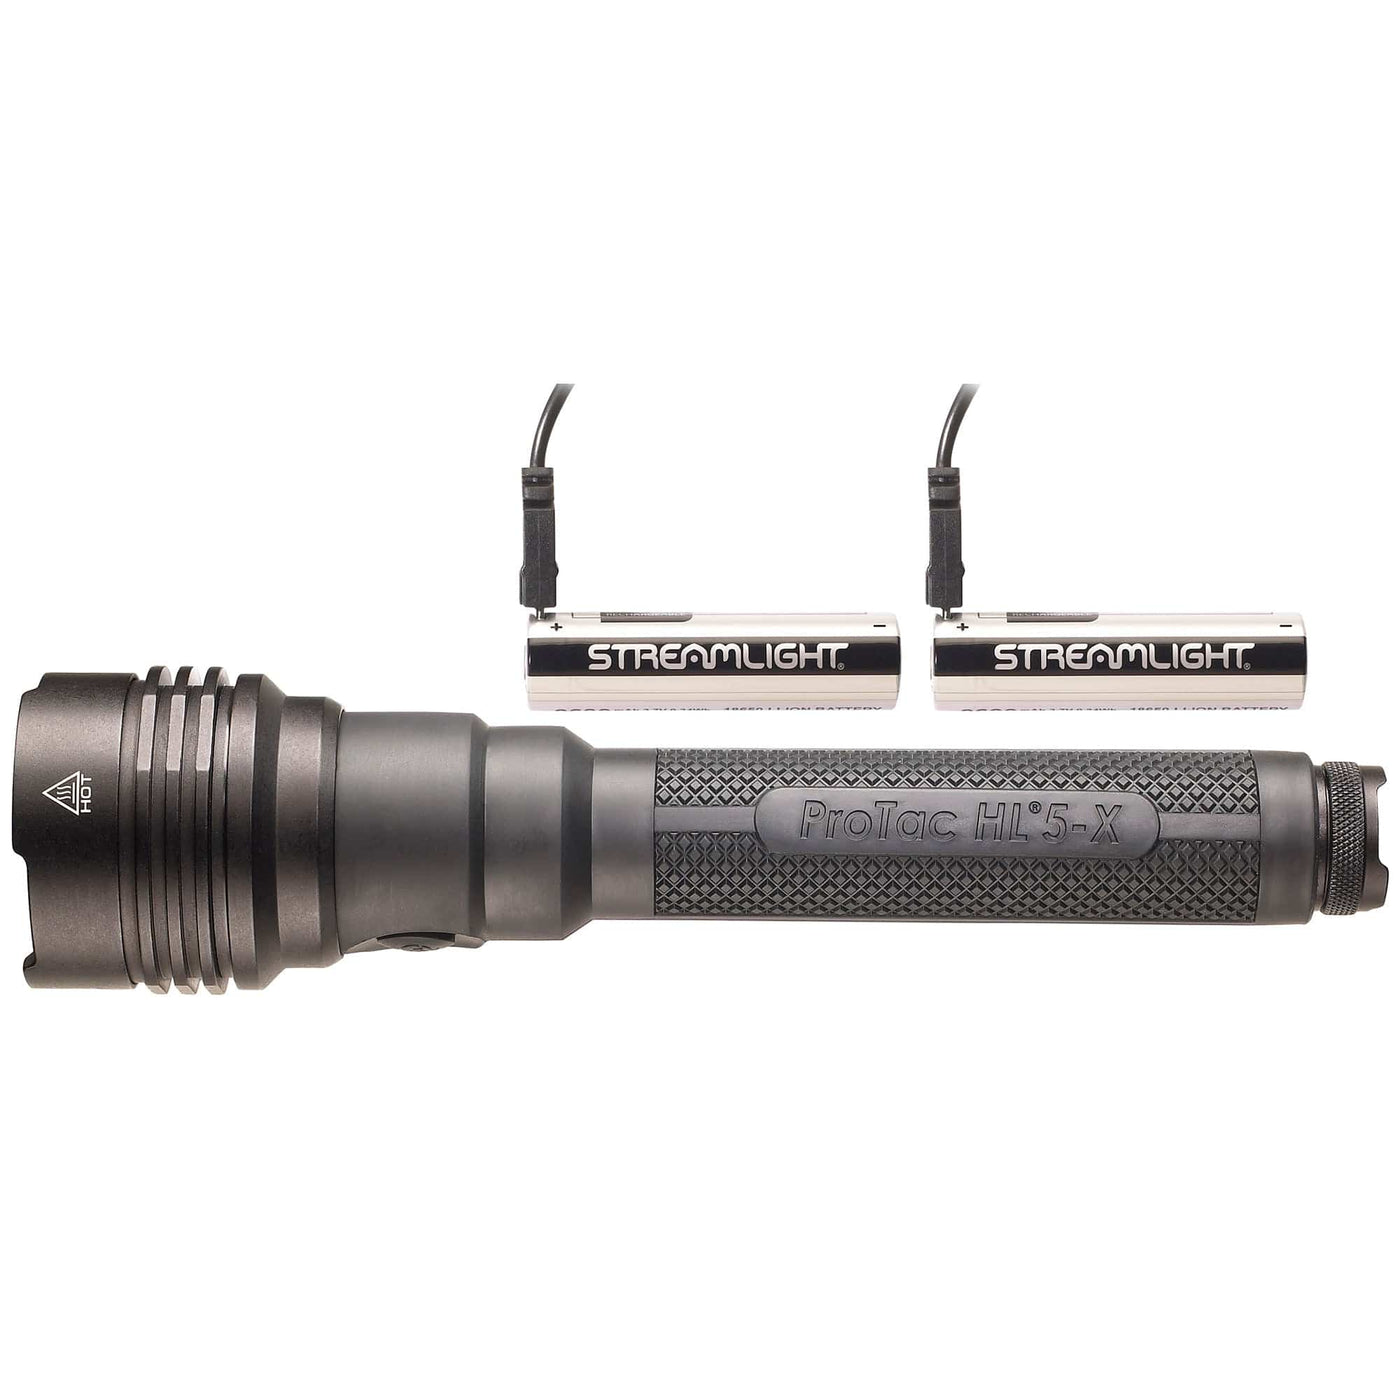 Streamlight Streamlight Pro-tac Hl 5x Usb - Light White Led W/ Usb Cord Flashlights & Batteries